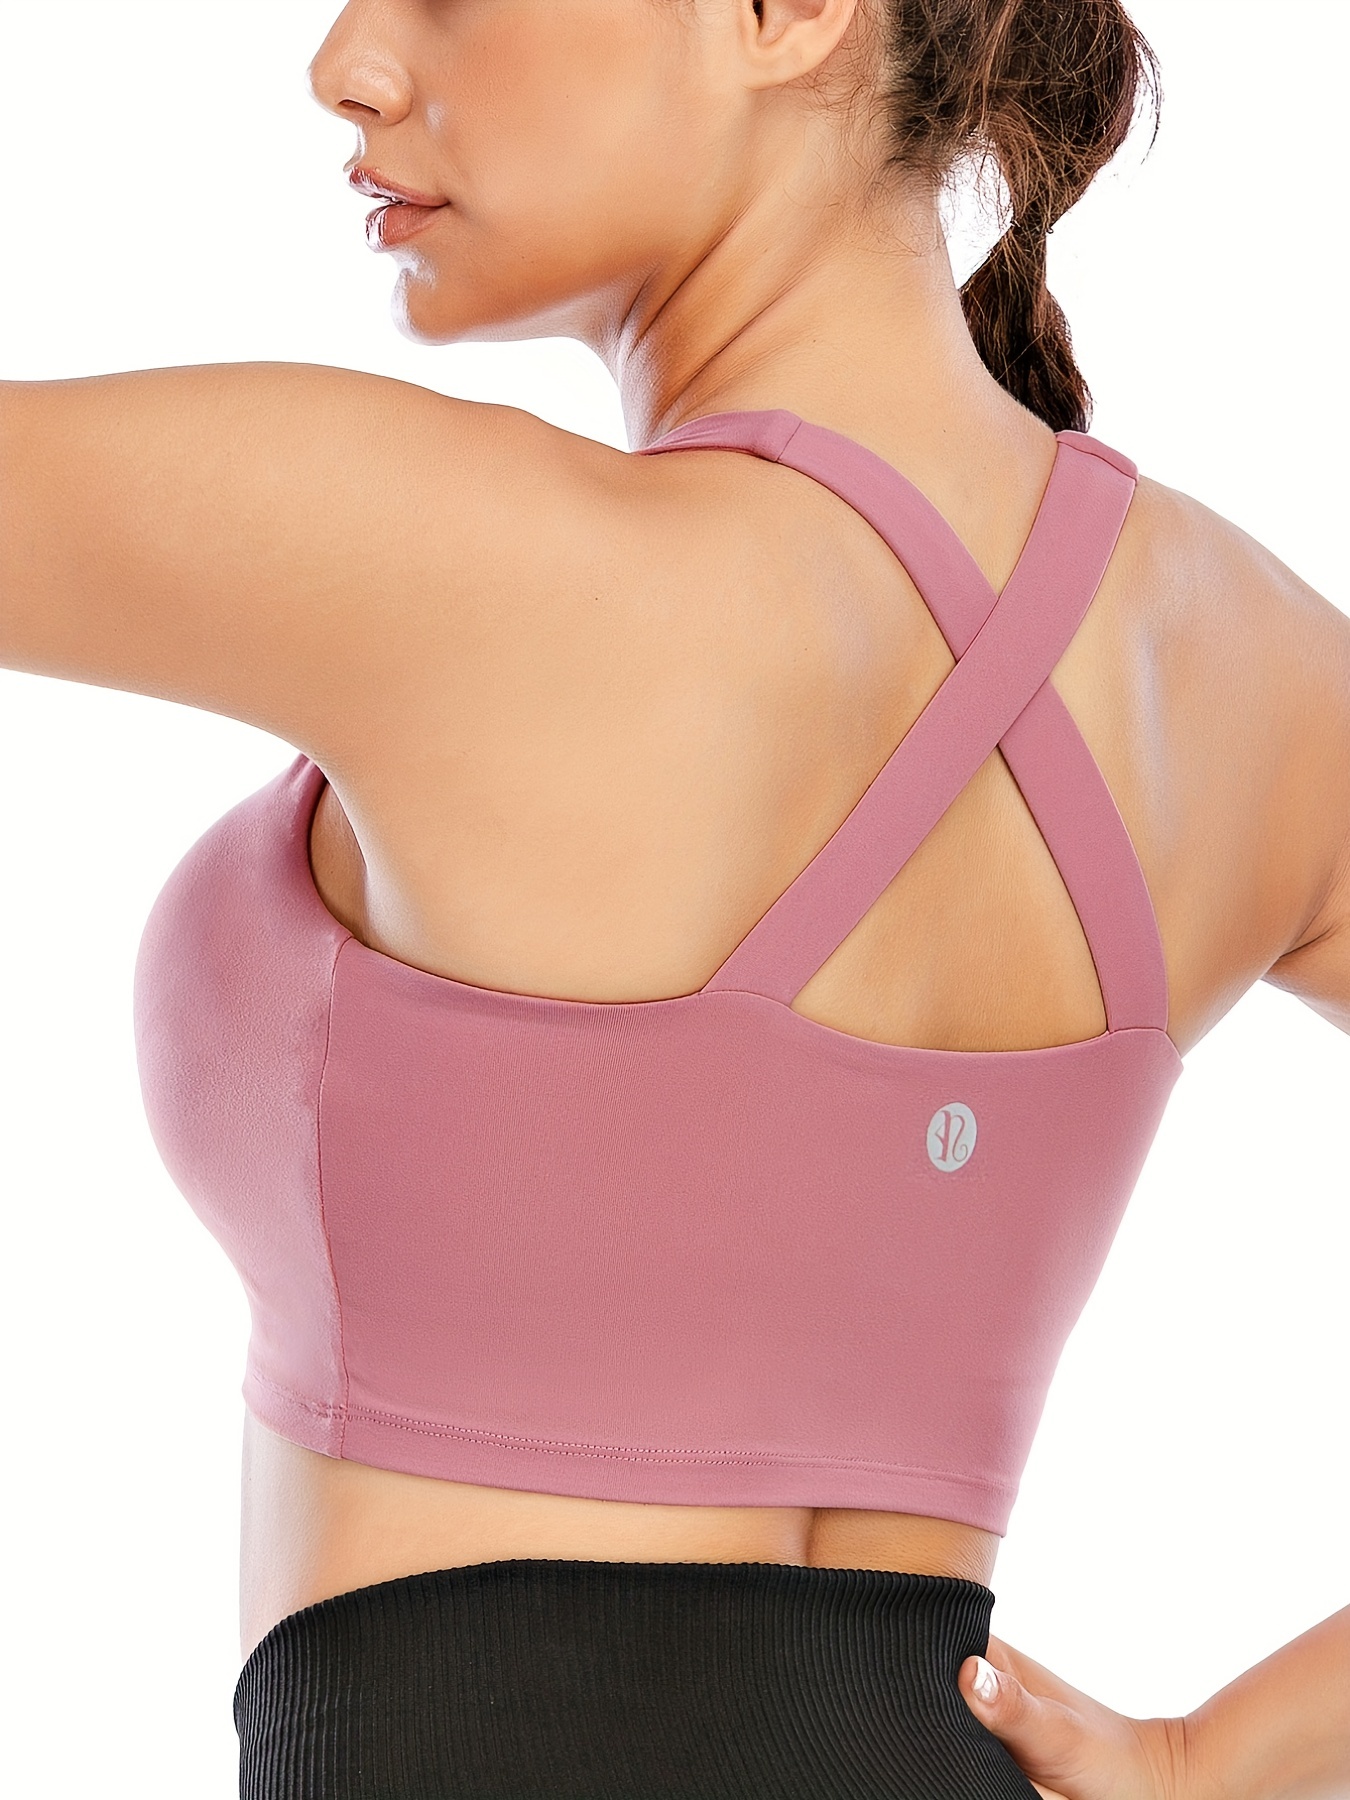 Women Longline Sports Bra Workout Top Yoga Bras High Impact Padded Support  Gym Fitness Running Crop Tank Tops New Light Pink Sport Bra X-Large 